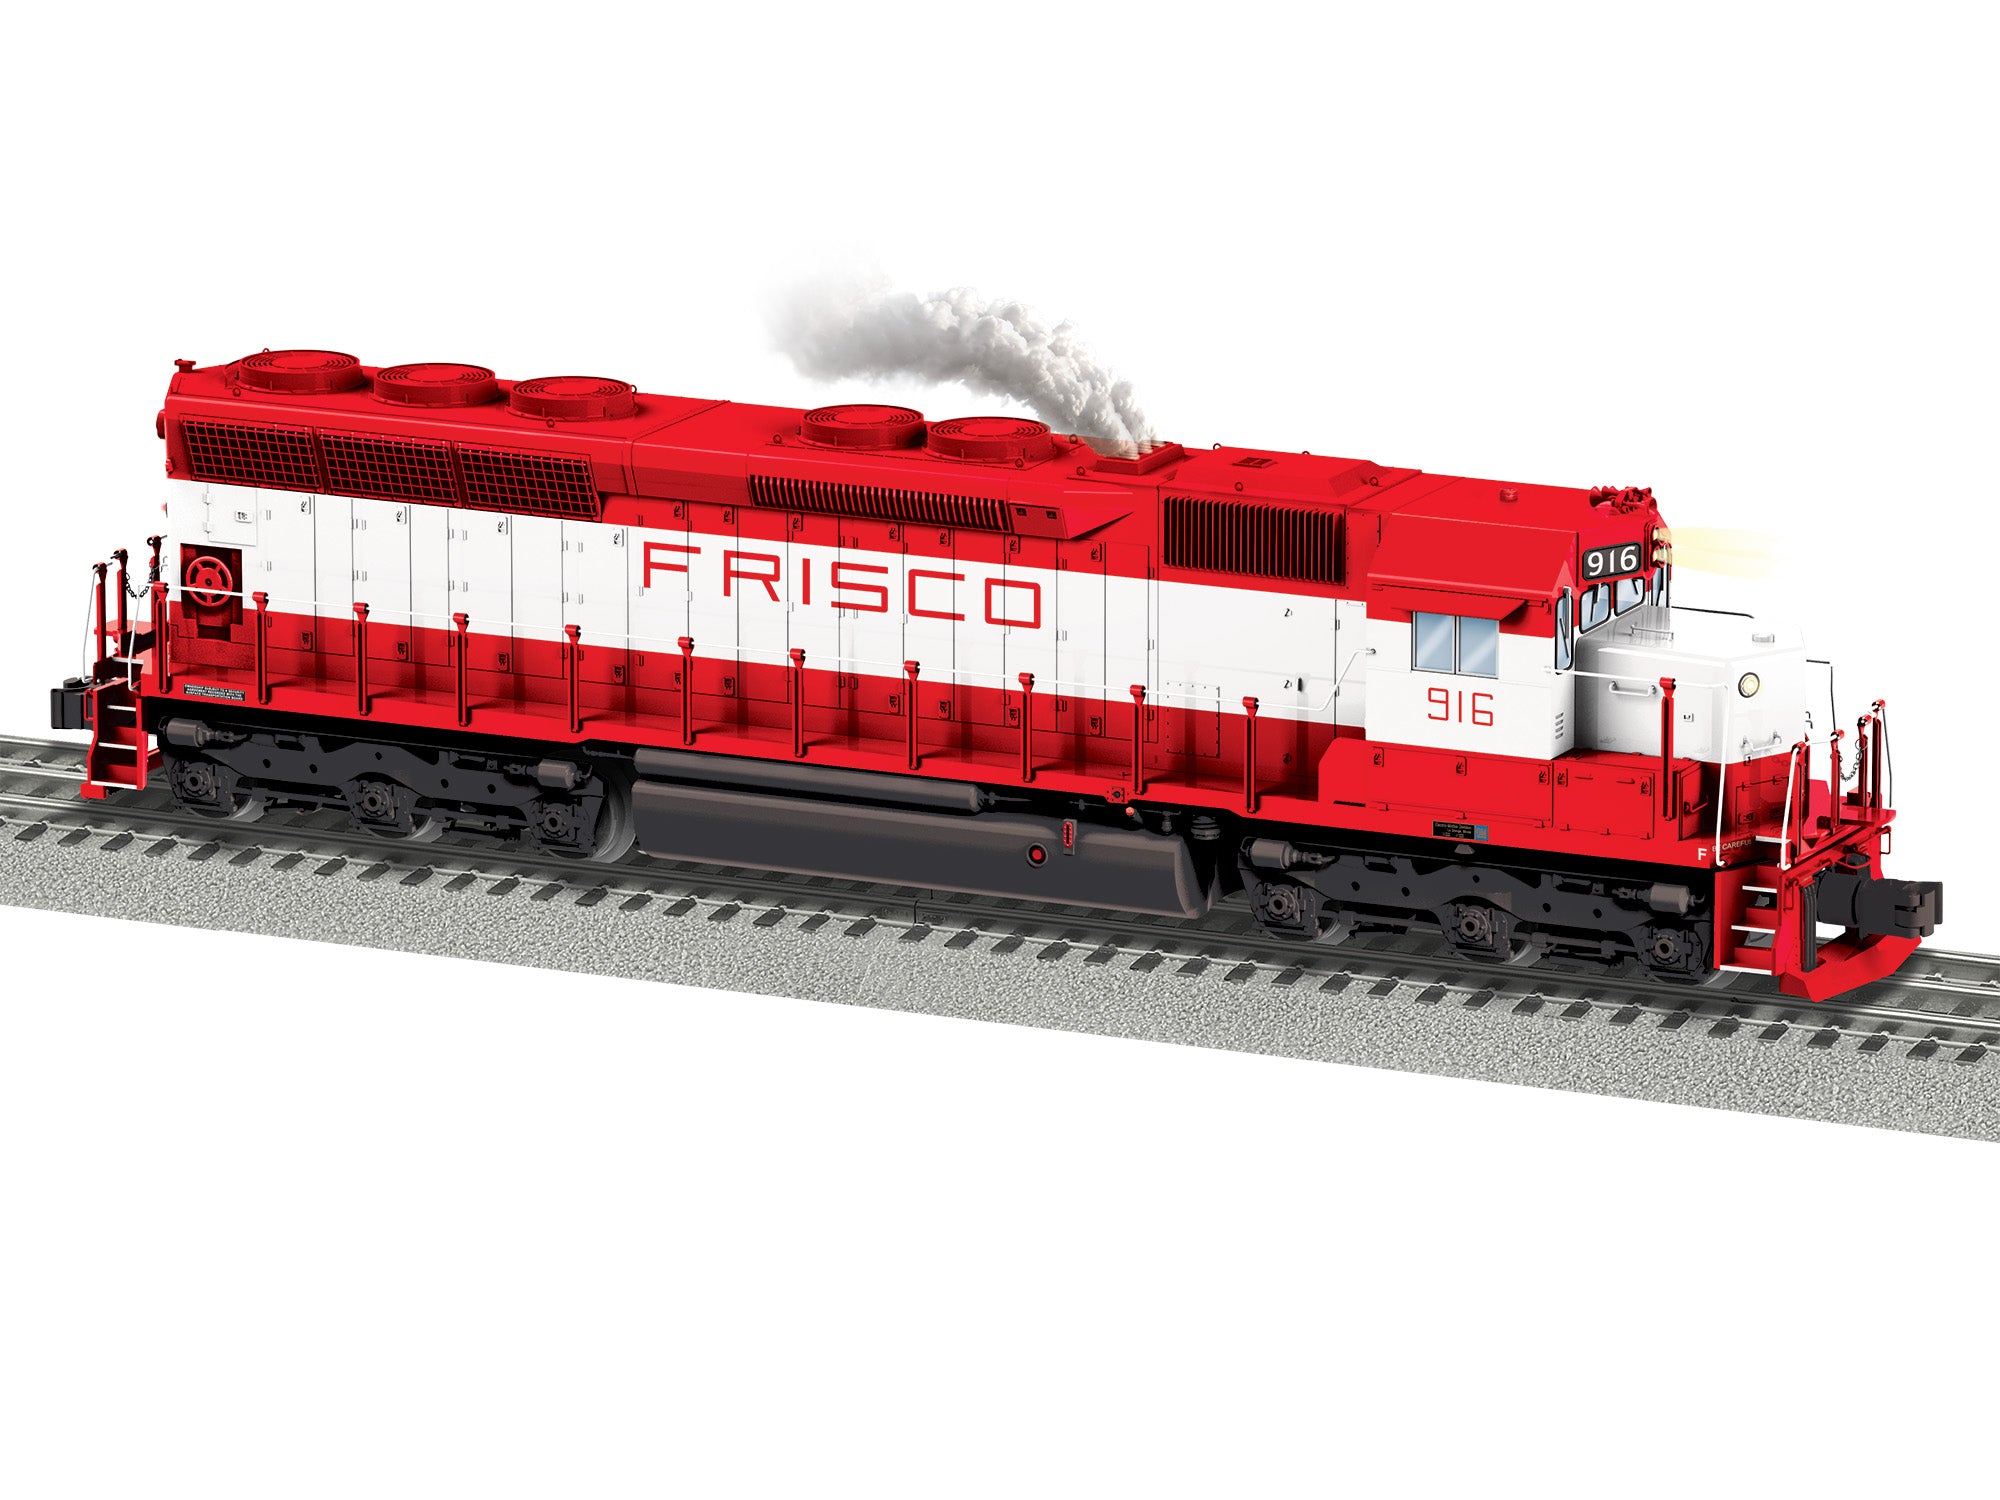 Lionel 2433562 - Legacy SD45 Diesel Locomotive "Frisco" #916